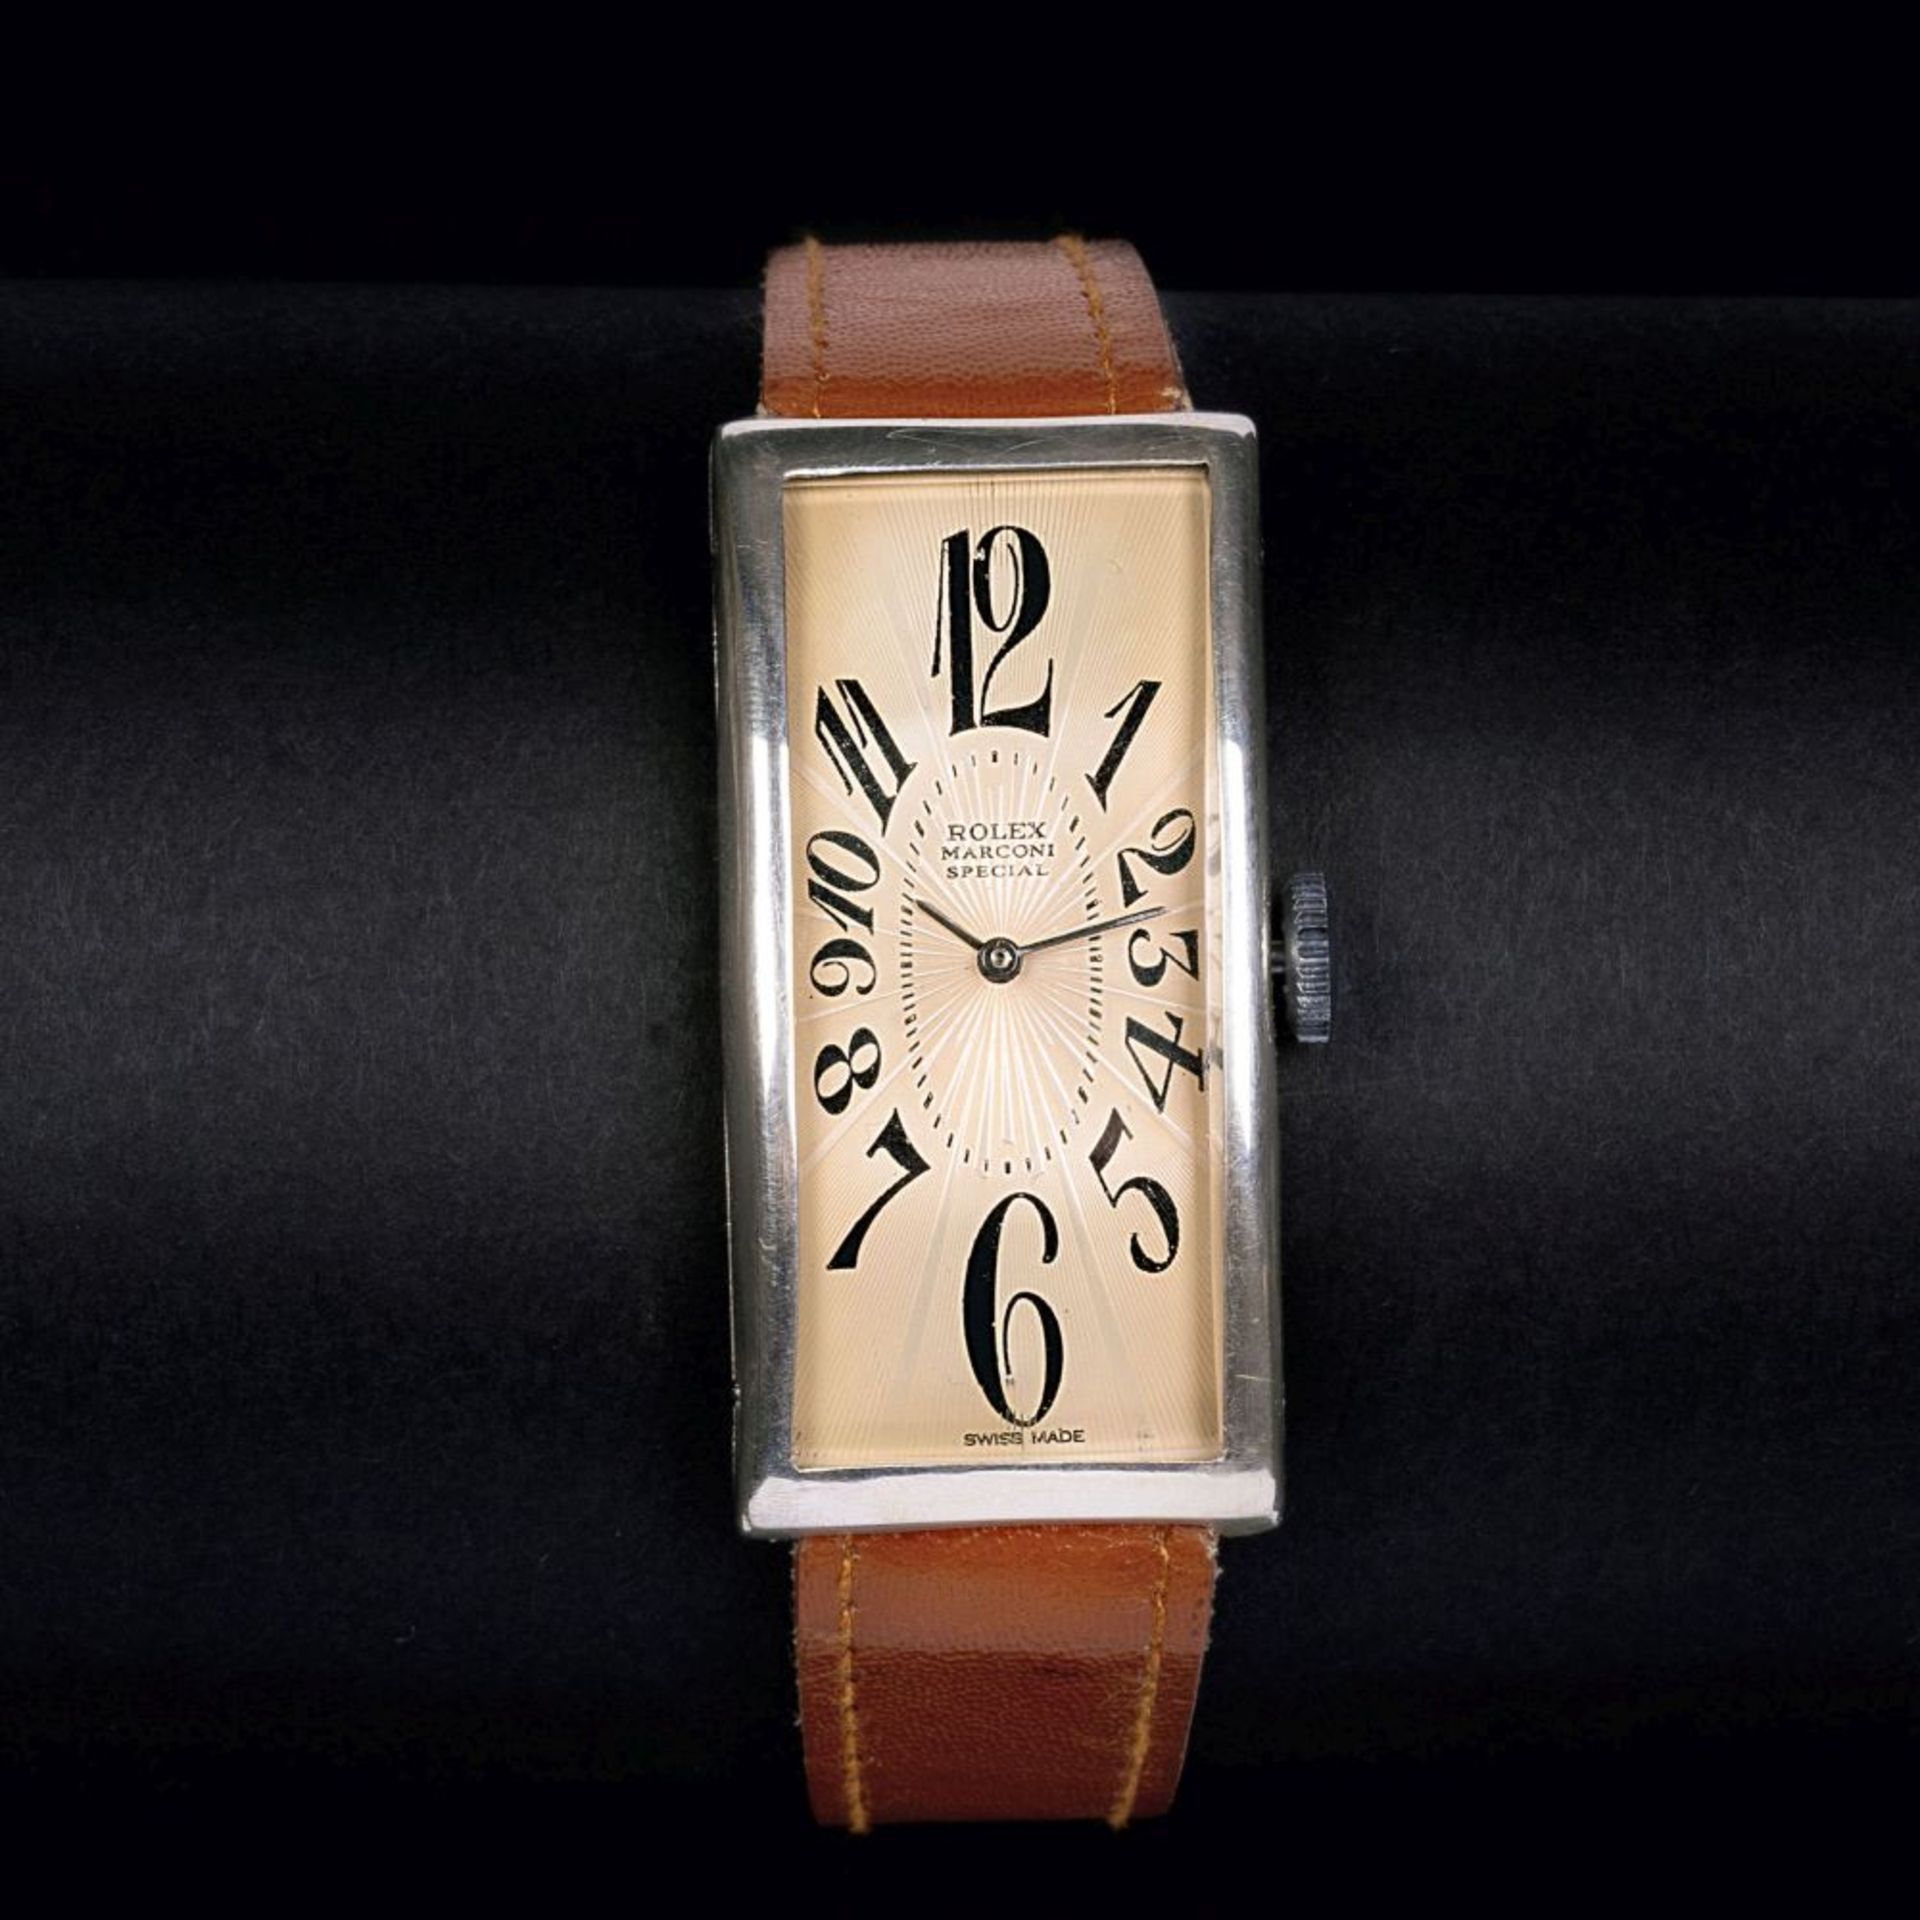 Rolex Marconi since 1911. A rare Vintage Gentlemen's Wristwatch.